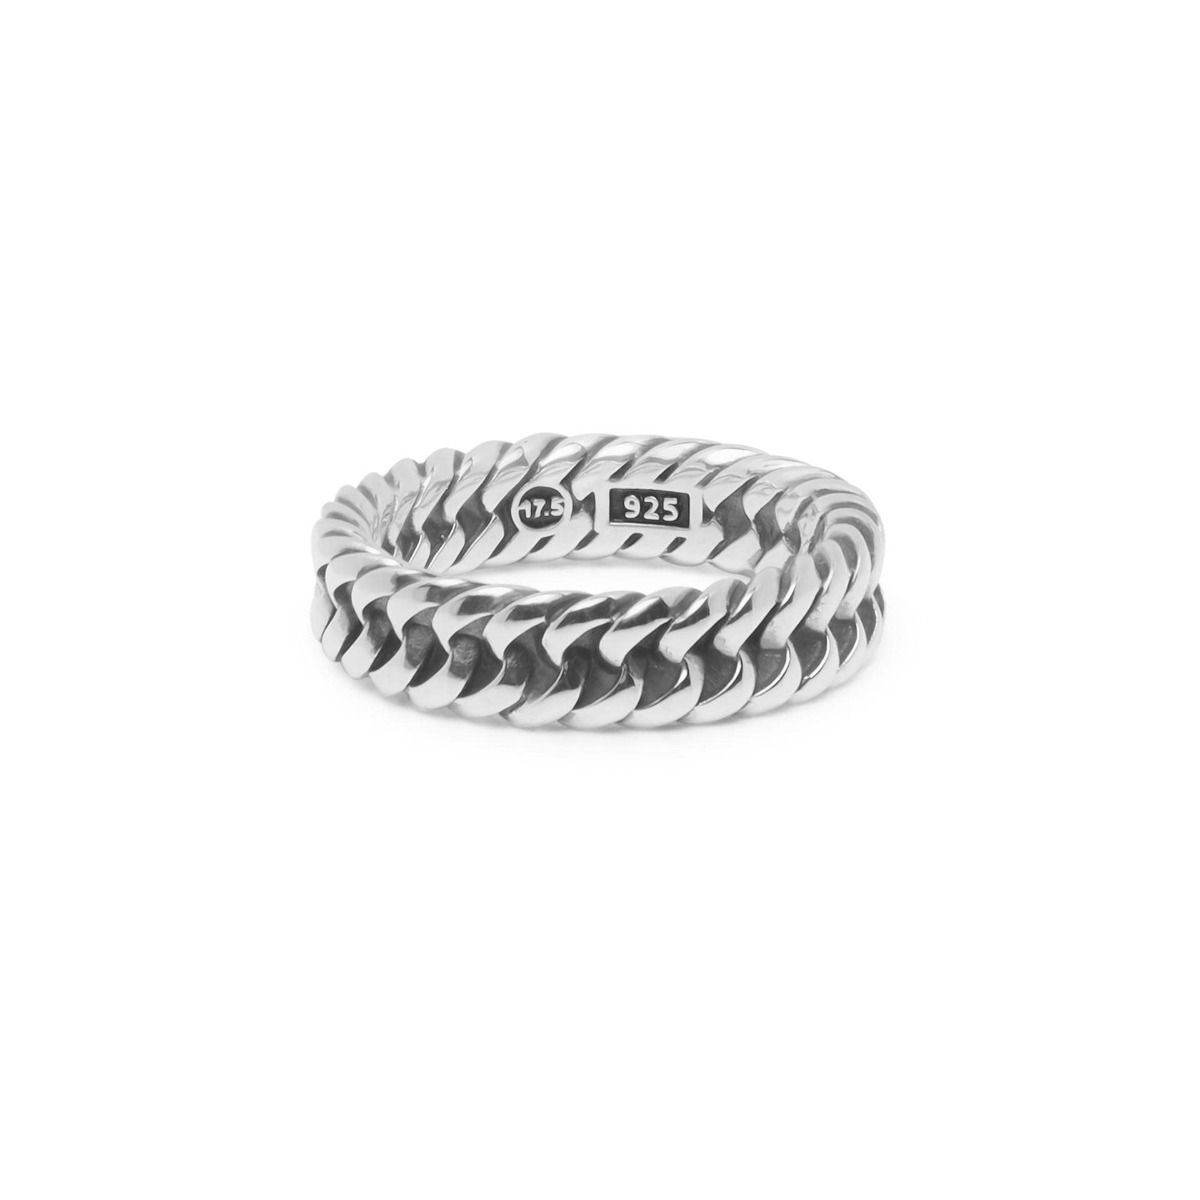 Buddha to Buddha - 614 - Chain XS Ring Silver